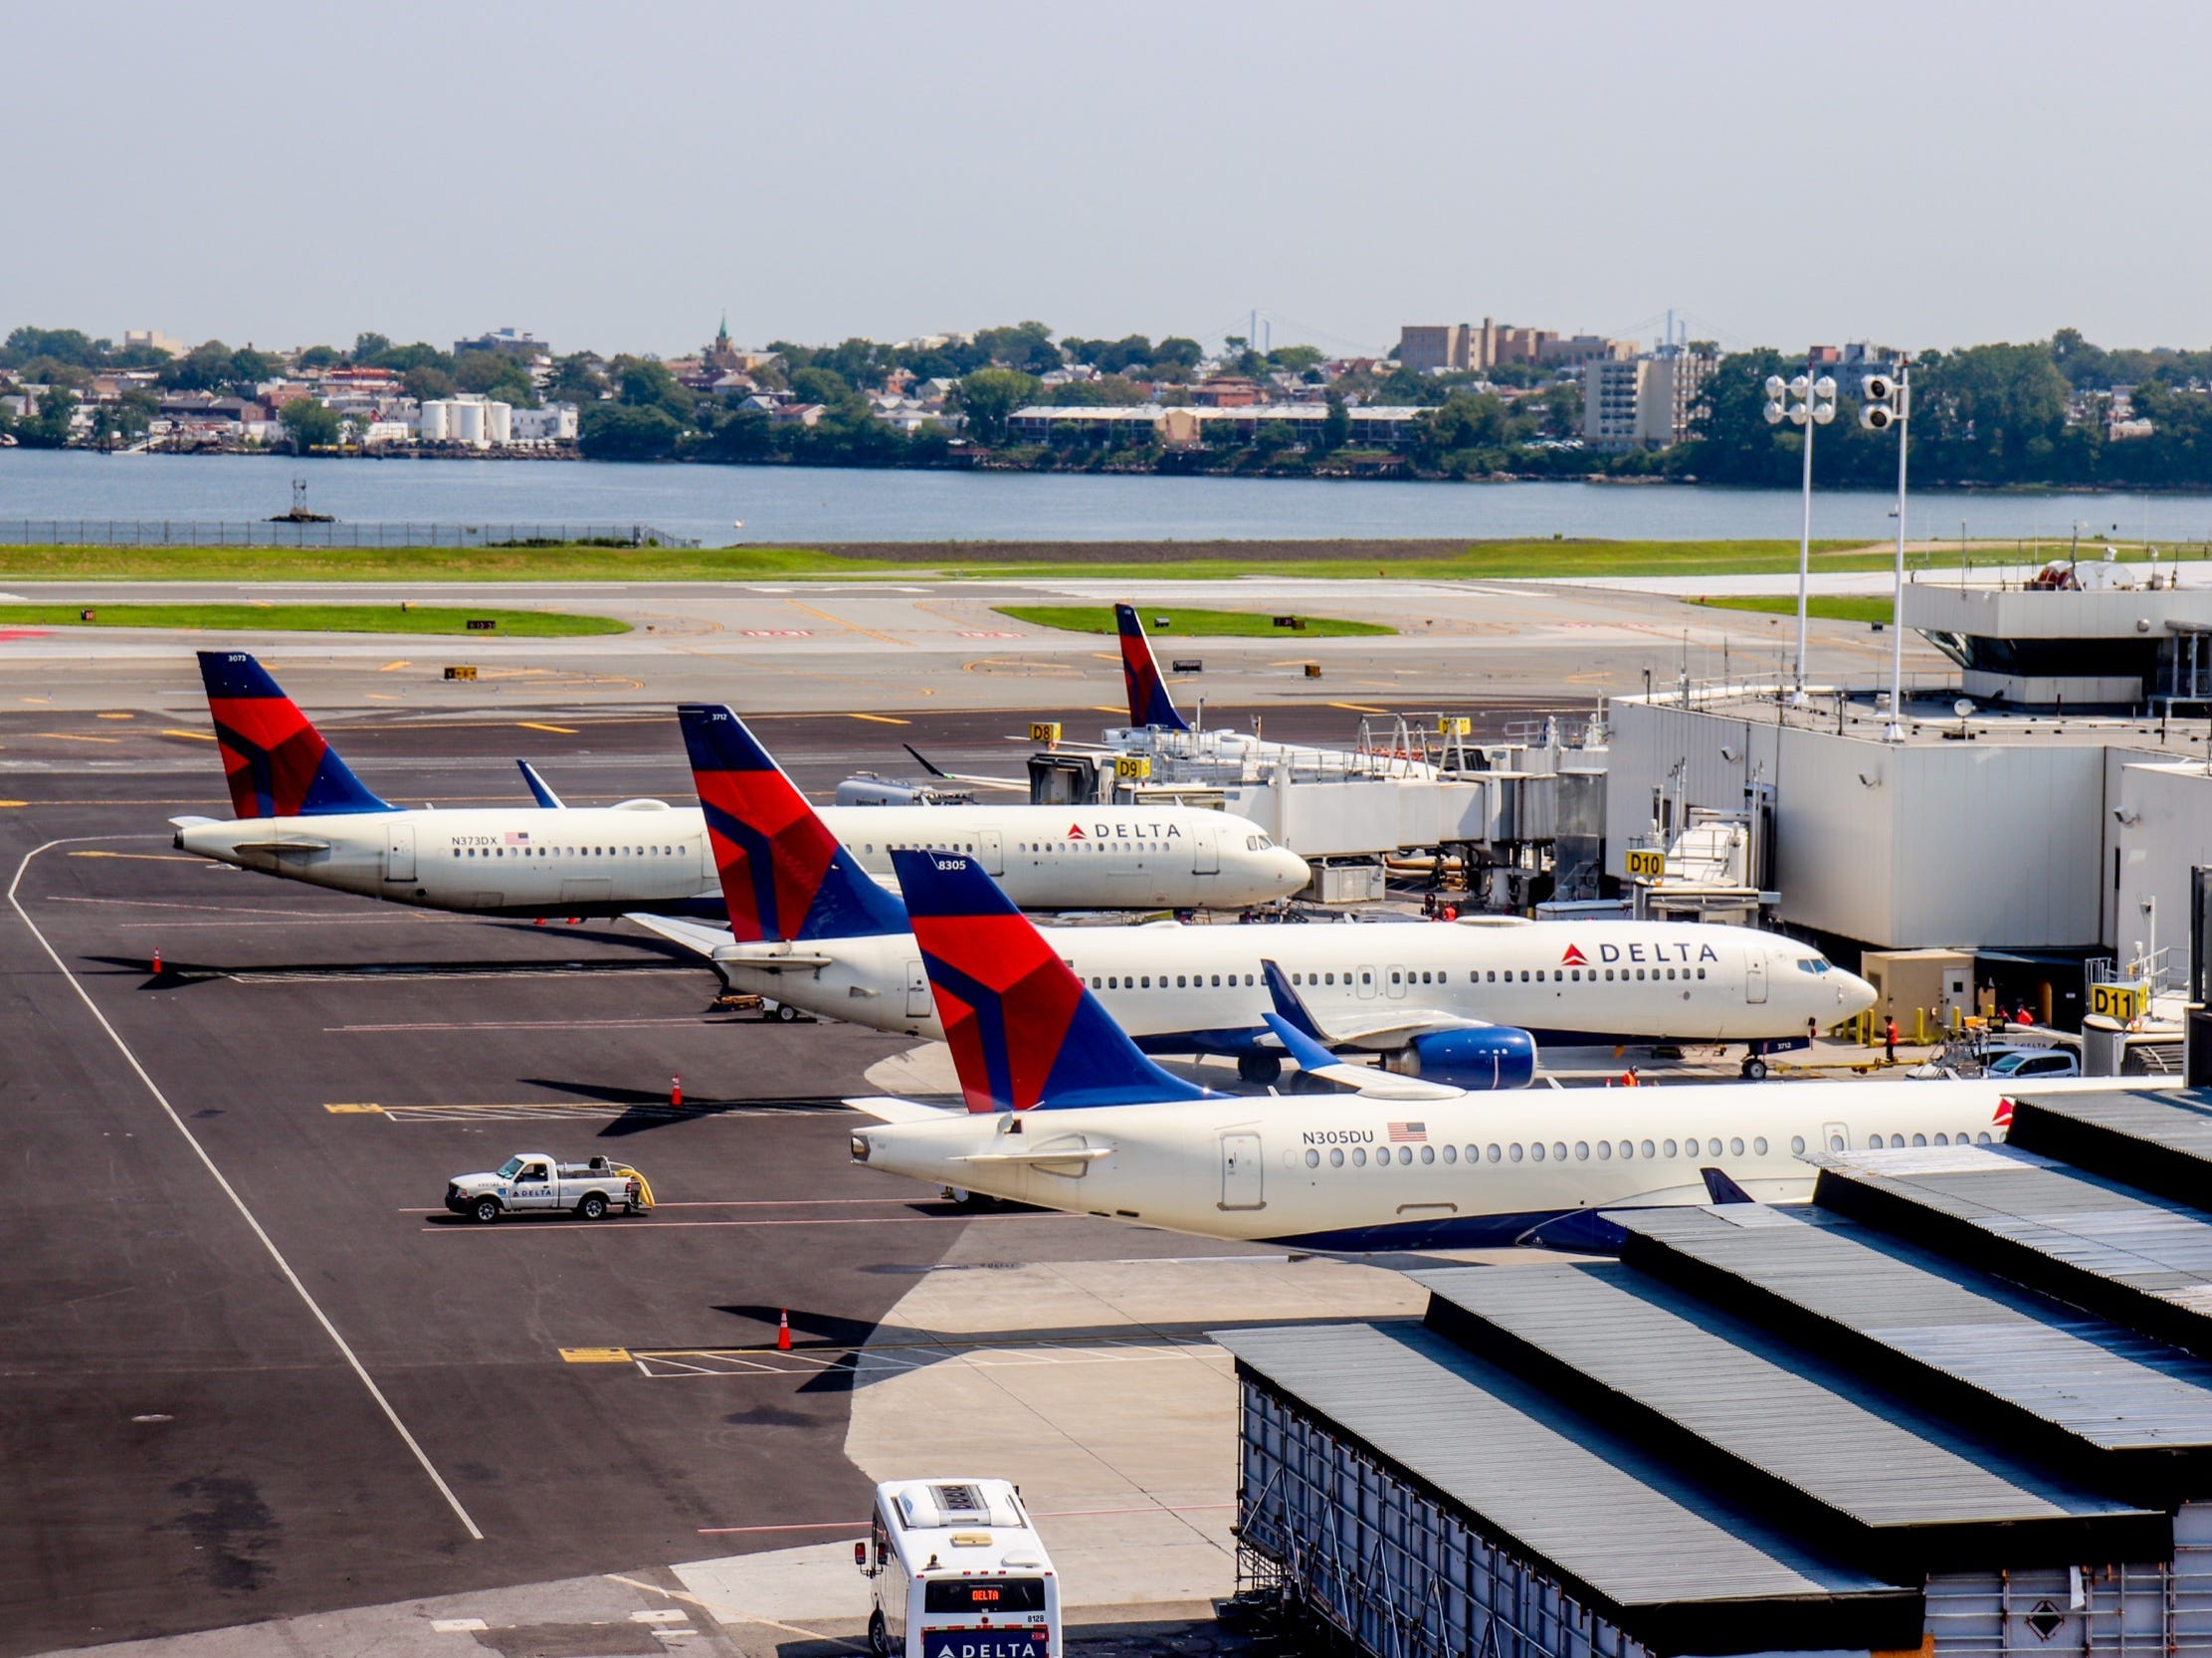 Touring Delta Air Lines' new terminal at LaGuardia Airport  — Delta Hard Hat Tour 2021